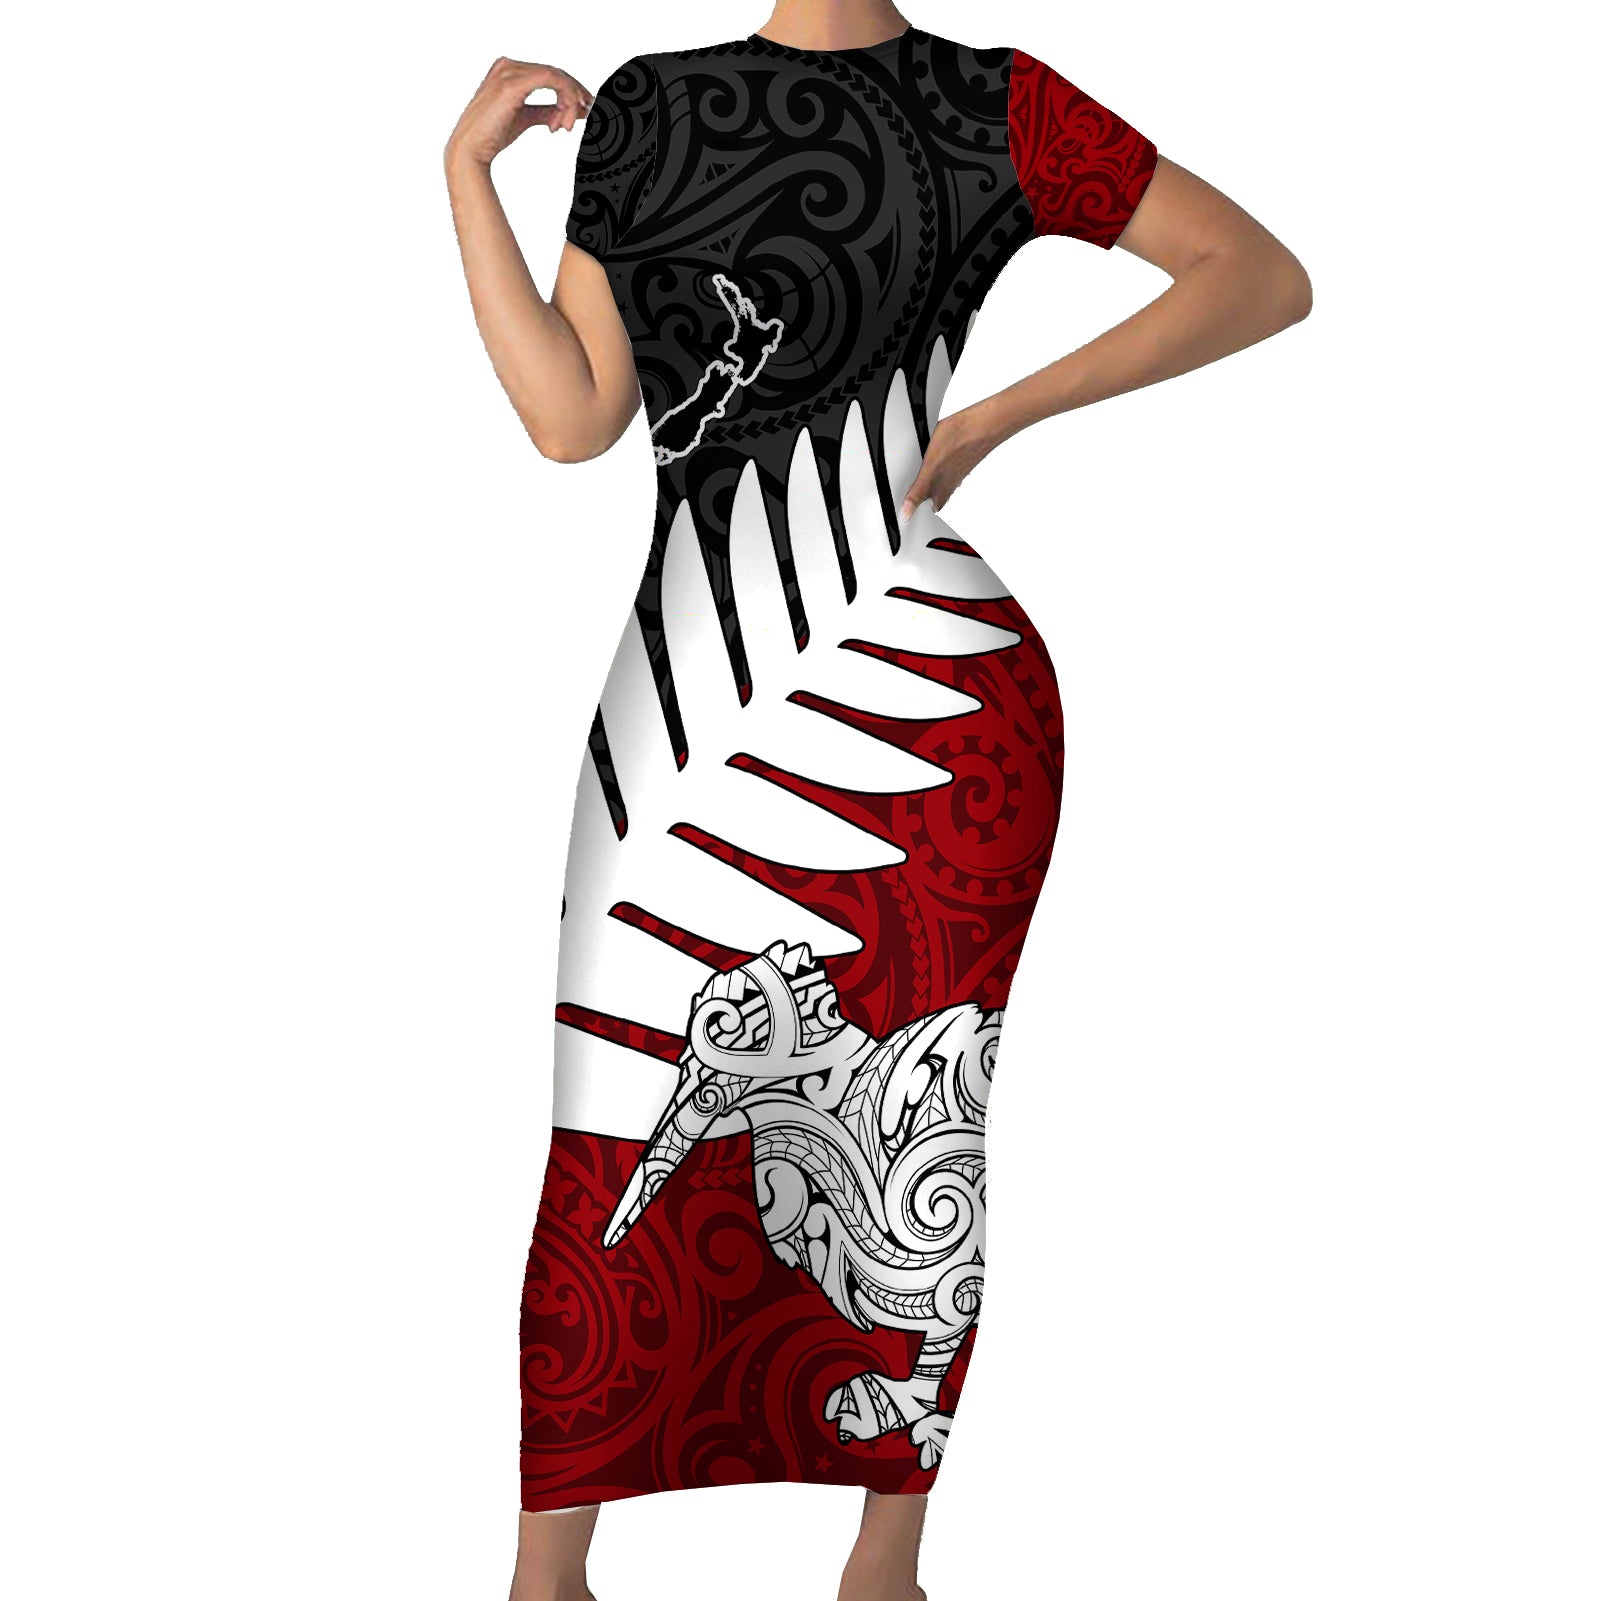 Aotearoa New Zealand Short Sleeve Bodycon Dress Silver Fern Kiwi Bird and NZ Map with Maori Tribal Red Style LT03 Long Dress Pink - Polynesian Pride